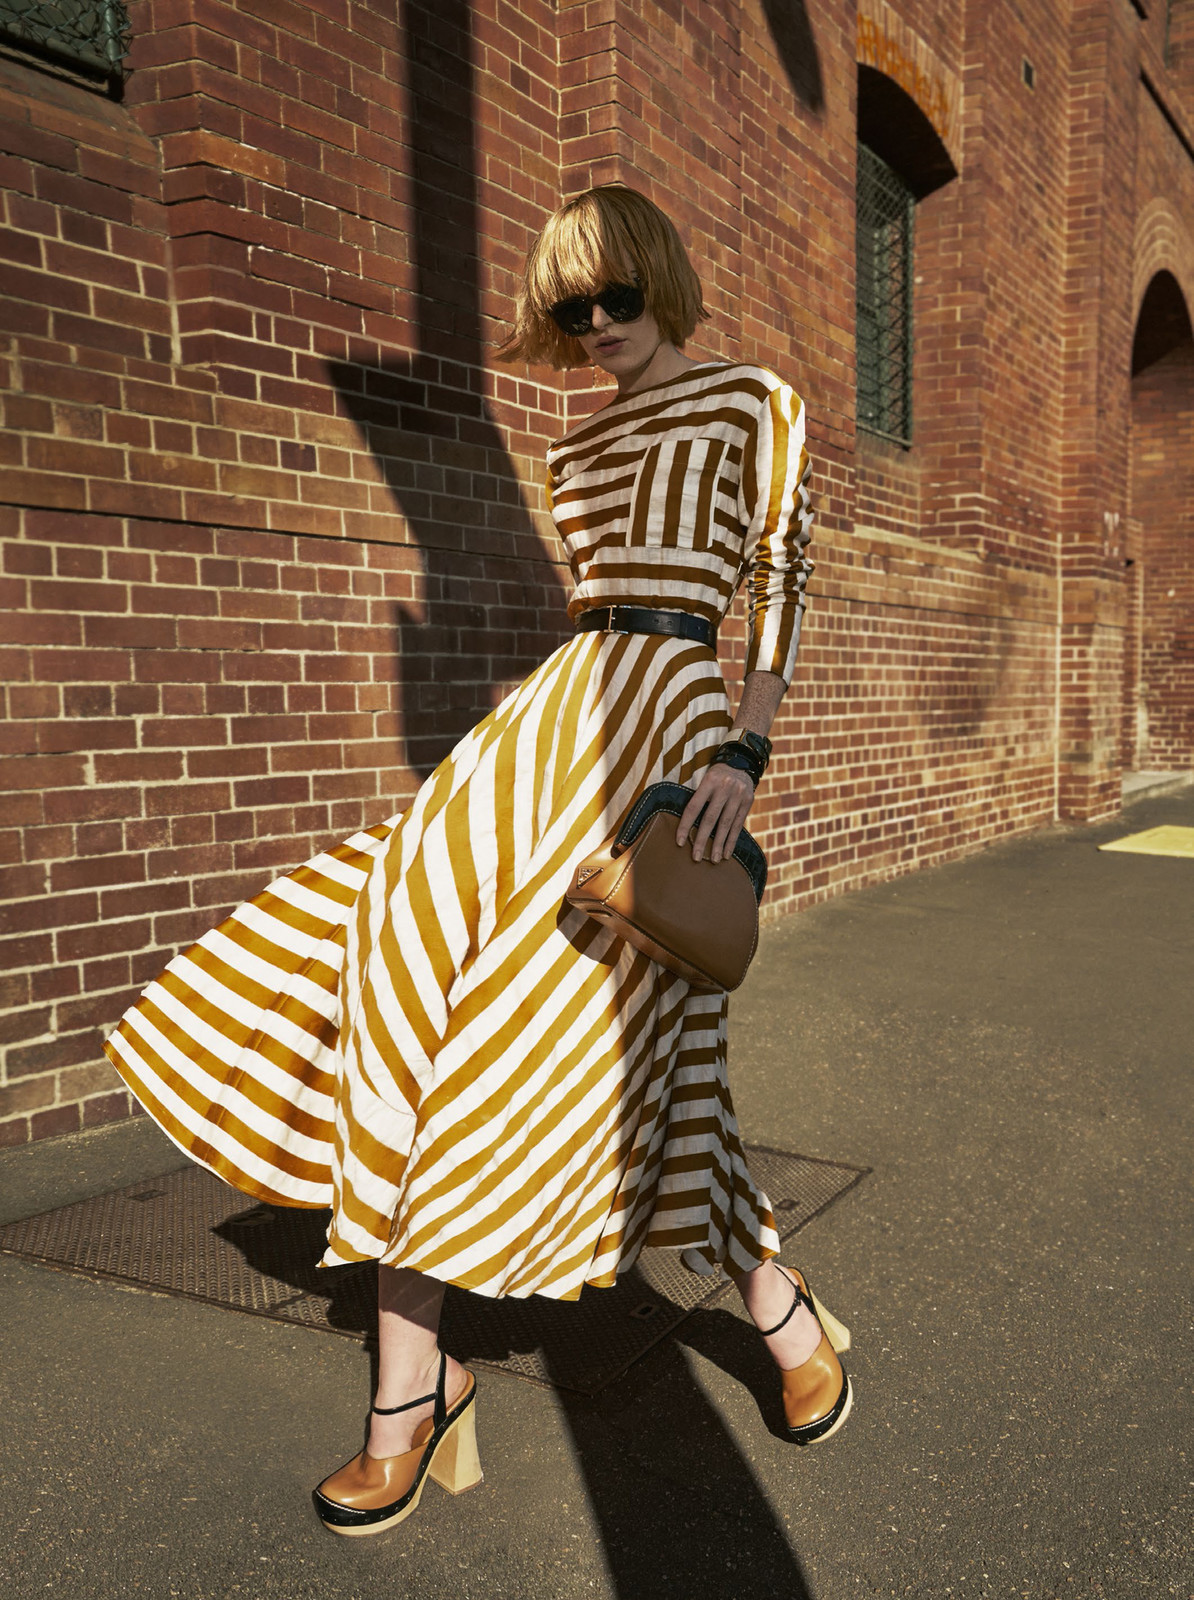 Street Talk - Harper's Bazaar Australia